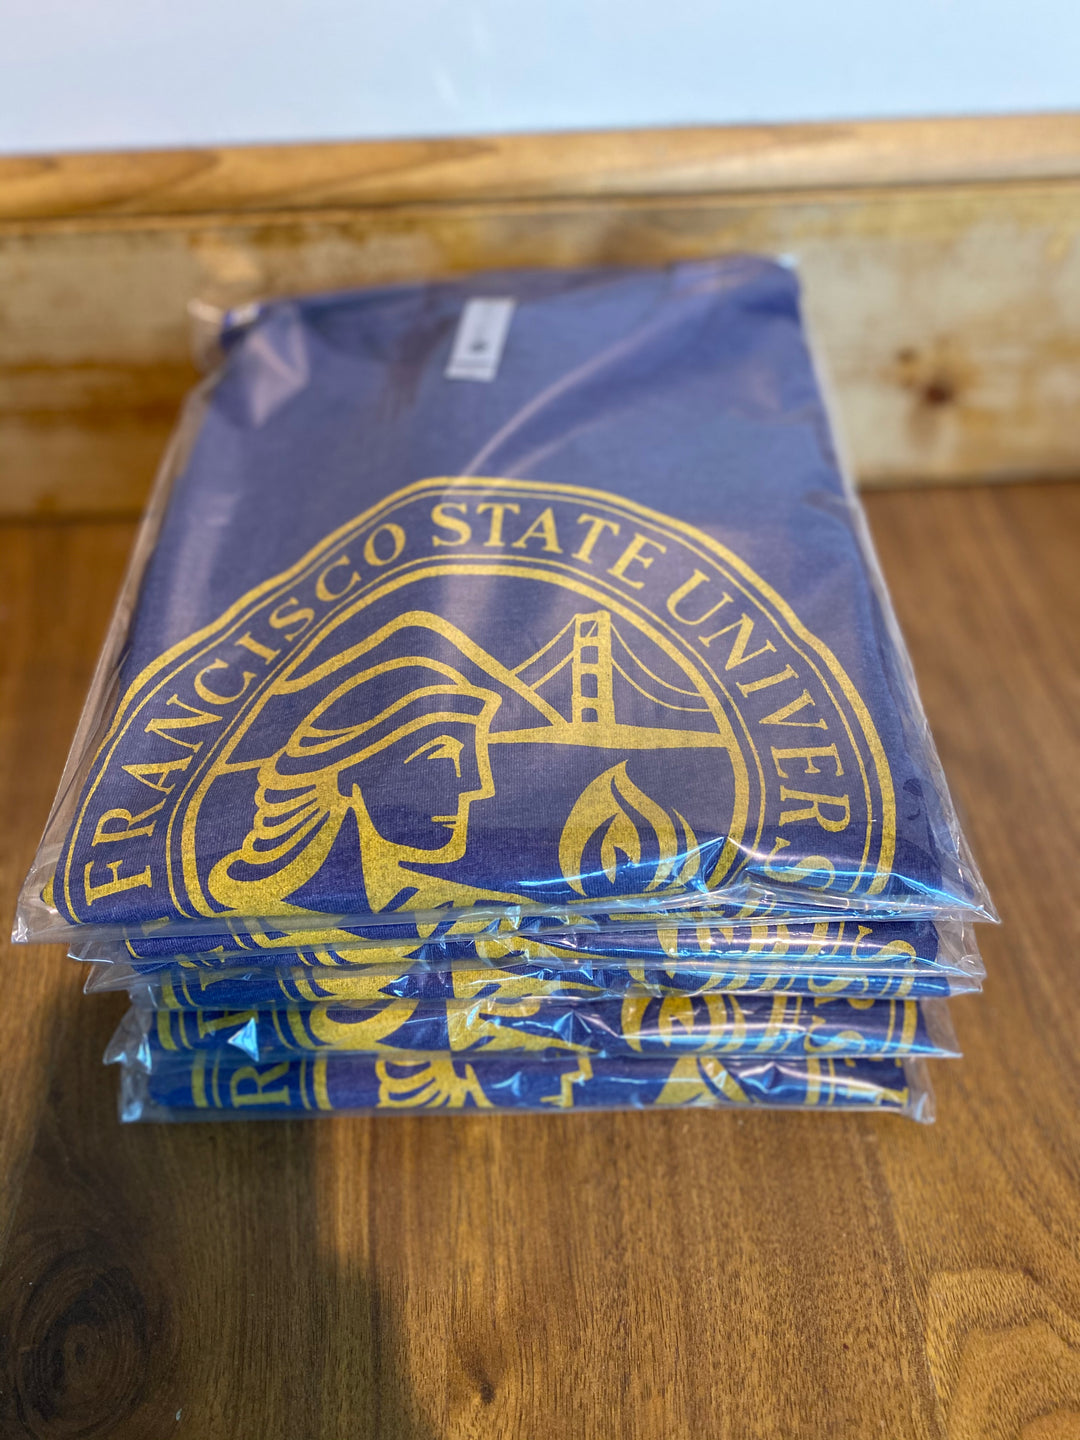 San Francisco State Gators University Seal Premium T-Shirt - Nudge Printing